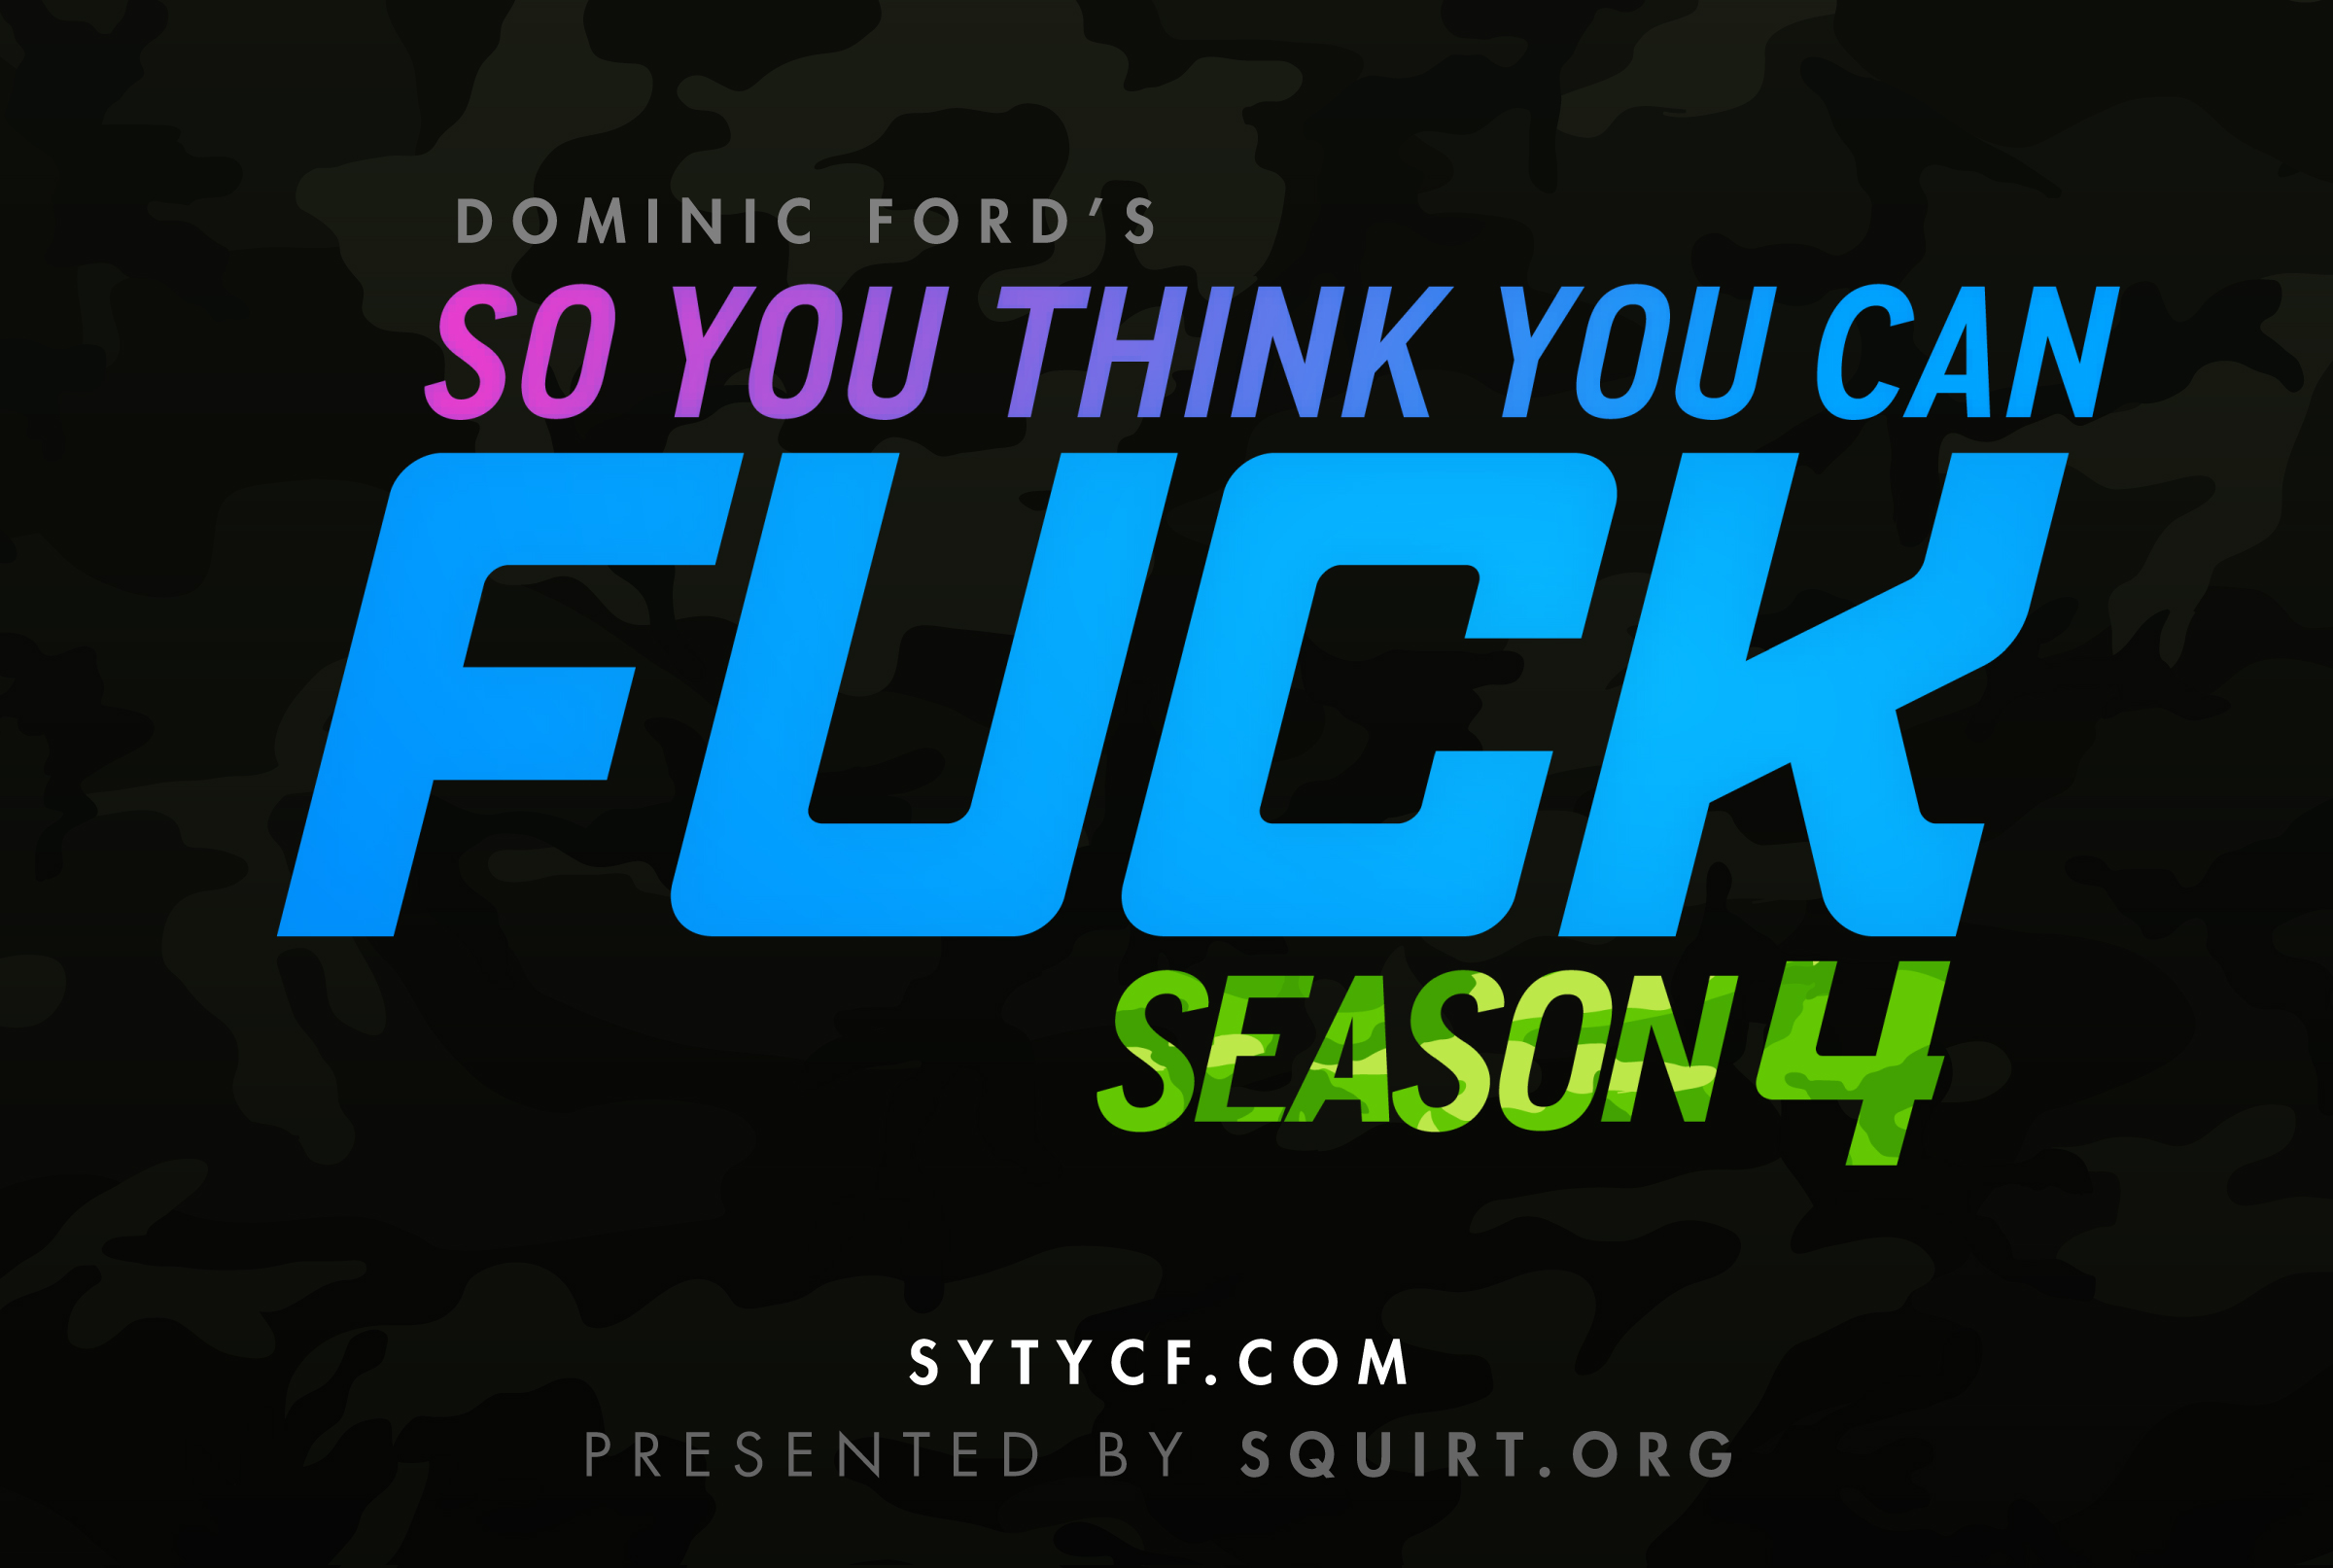 So You Think You Can Fuck Season 4